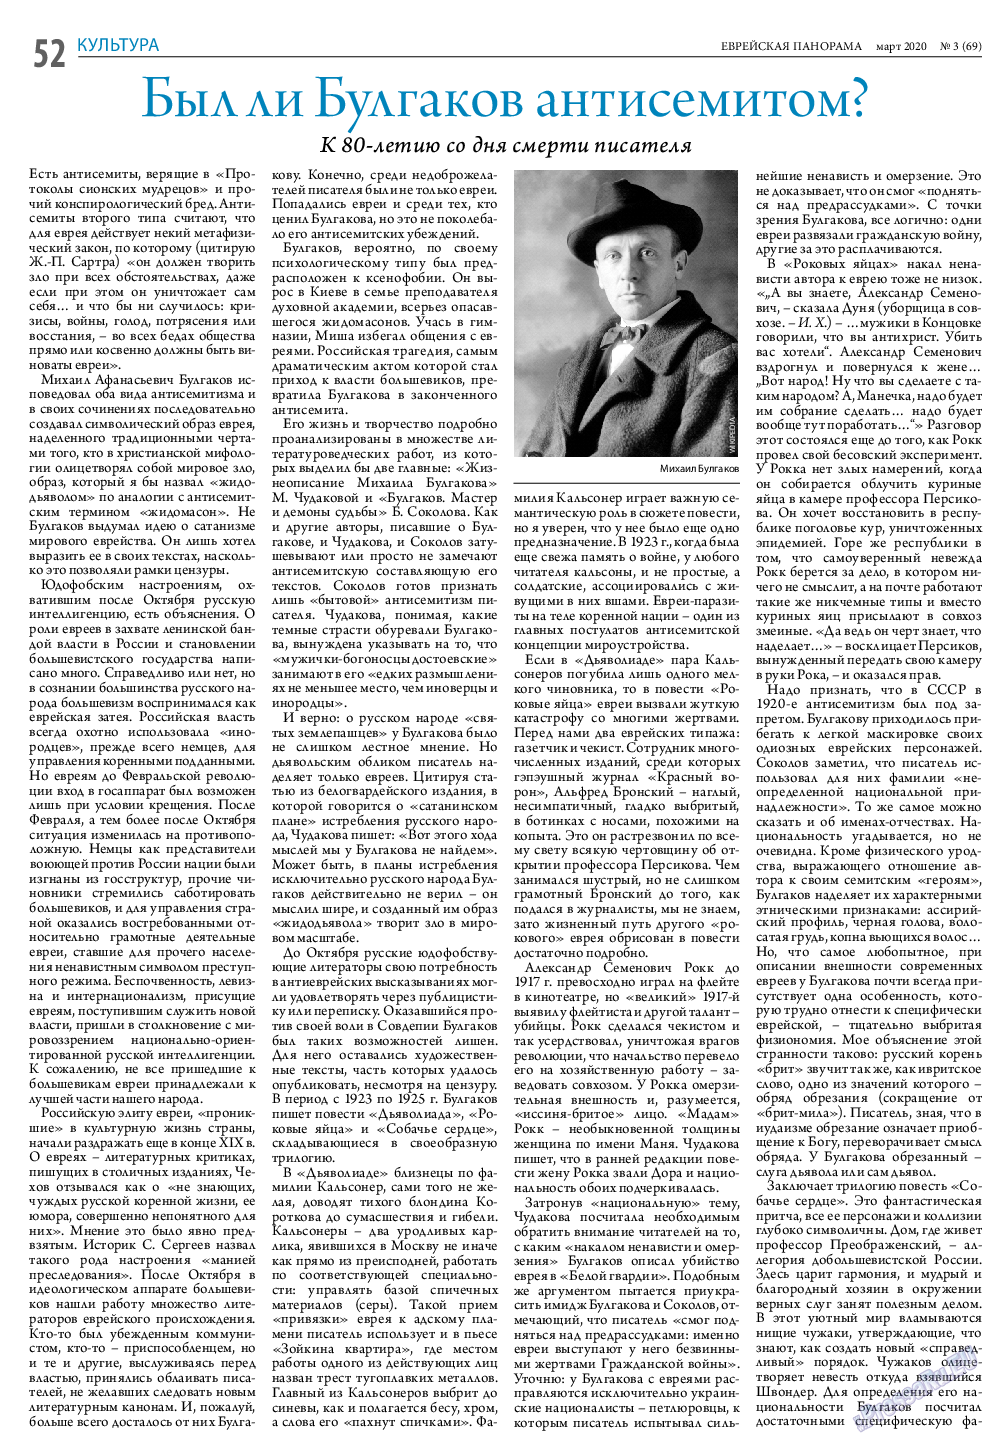 Еврейская панорама, газета. 2020 №3 стр.52